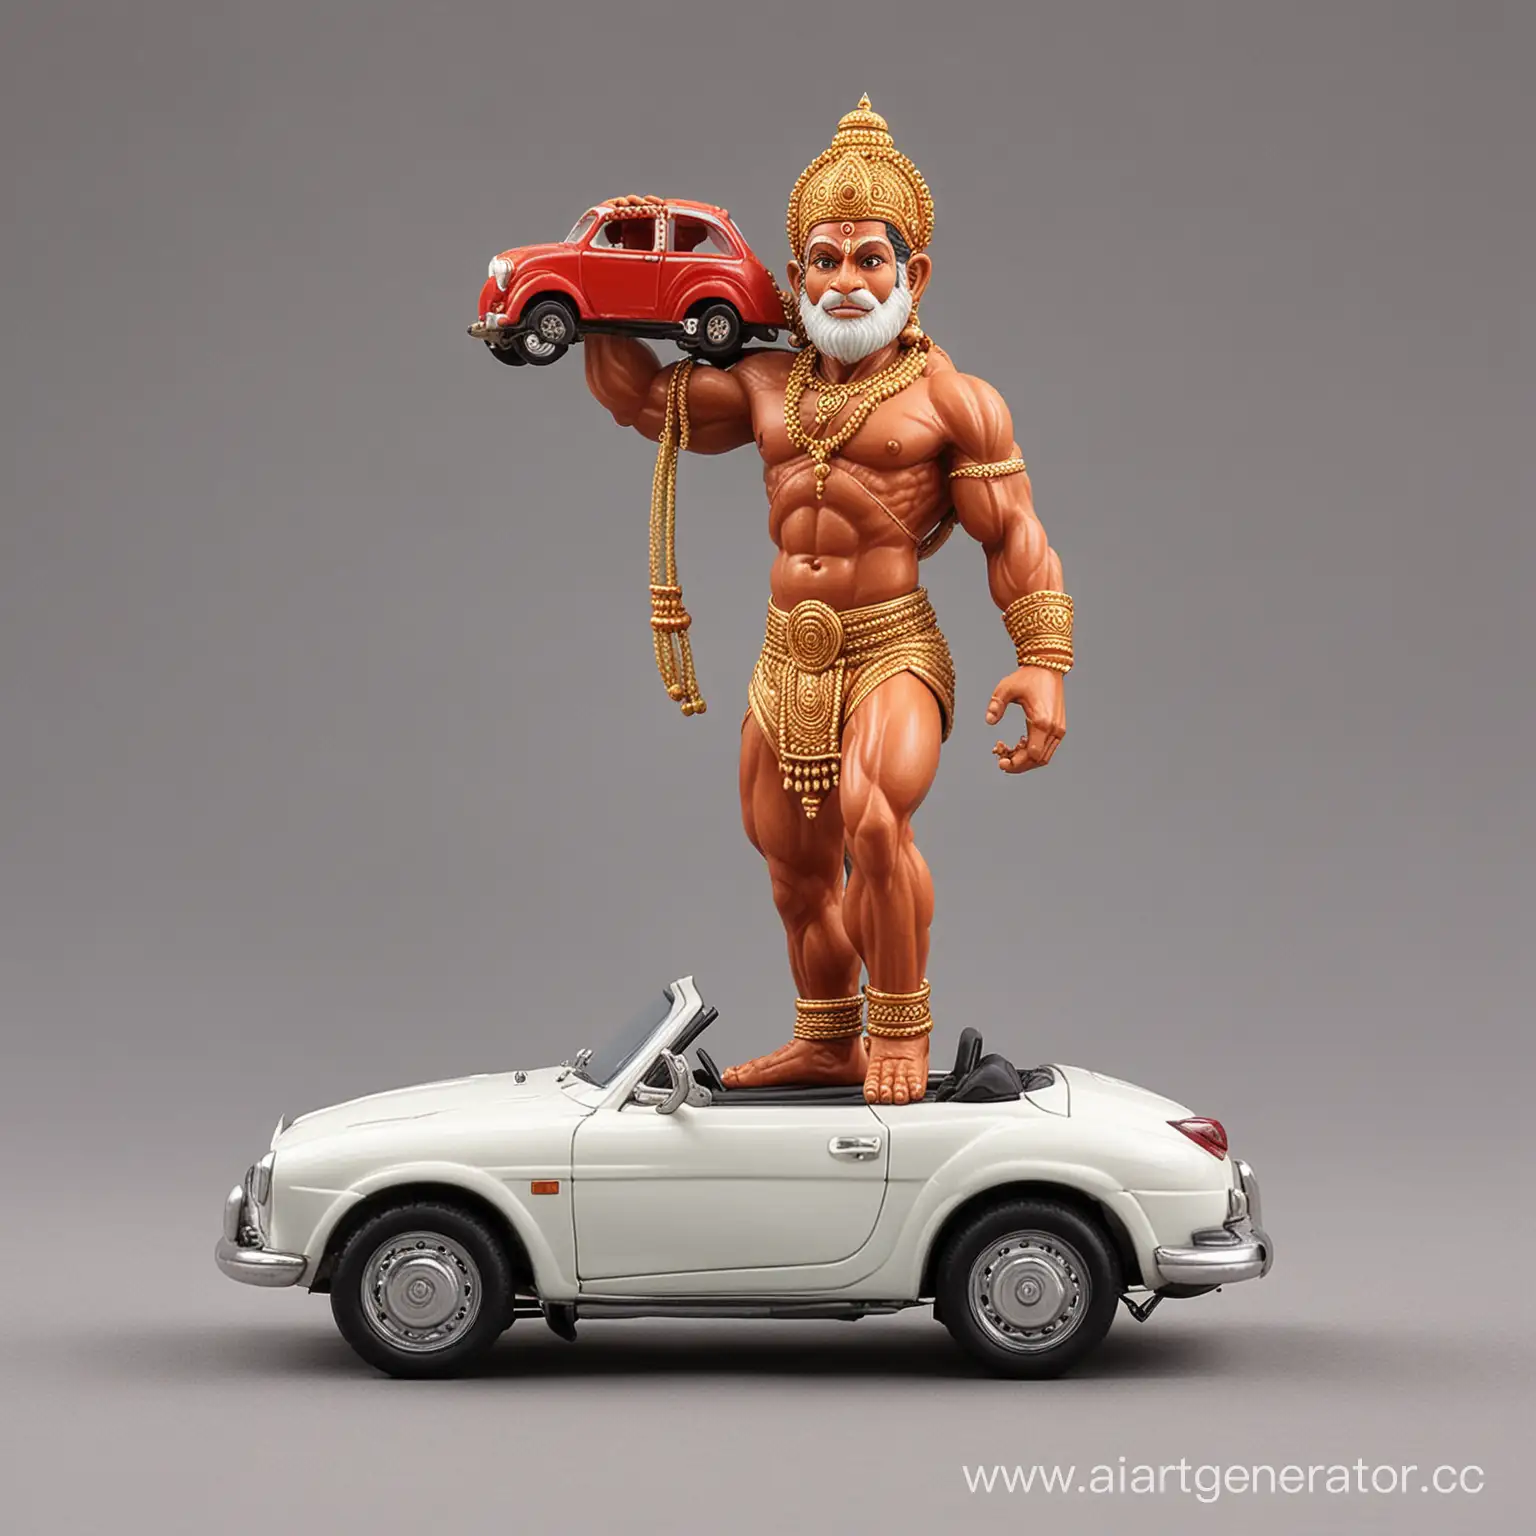 Hanuman-Holding-Modern-Car-in-Palm-Mythological-Monkey-Deity-Displays-Incredible-Strength